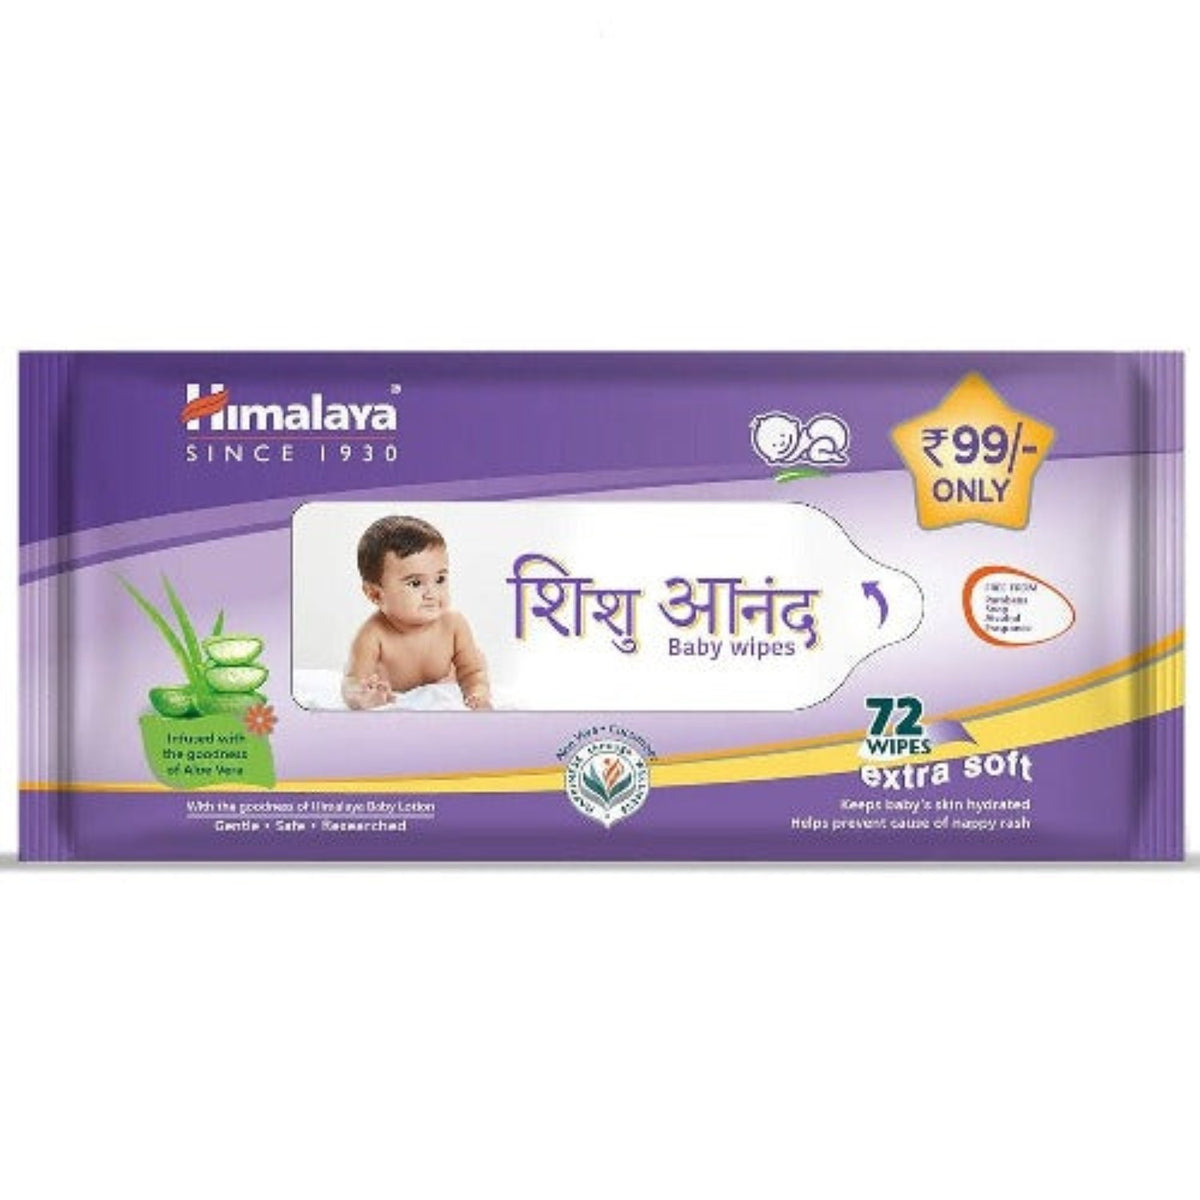 Аюрведические салфетки Himalaya Herbal Shishu Anand Baby Care сохраняют кожу ребенка увлажненной 72 секунды